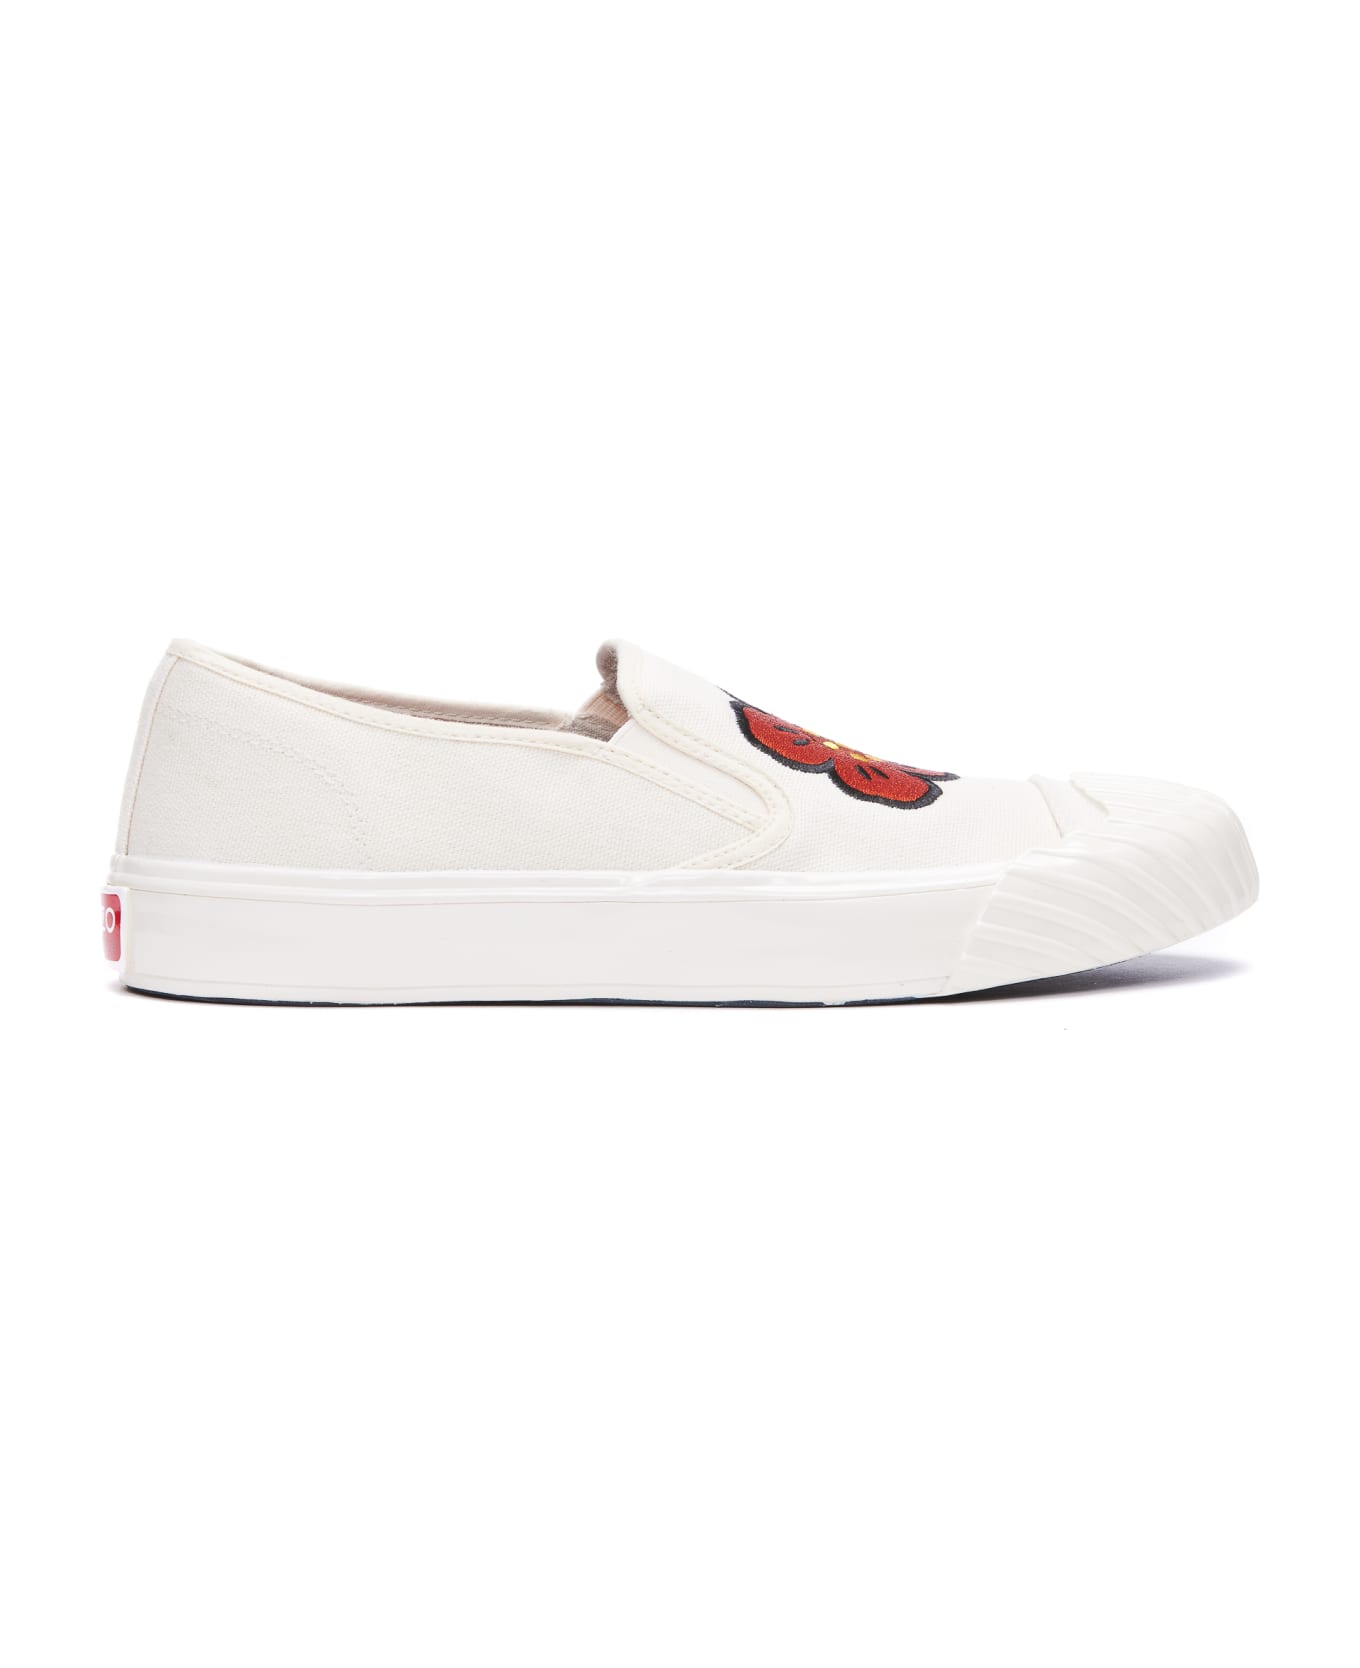 Kenzo School Slip On Sneakers - Bianco